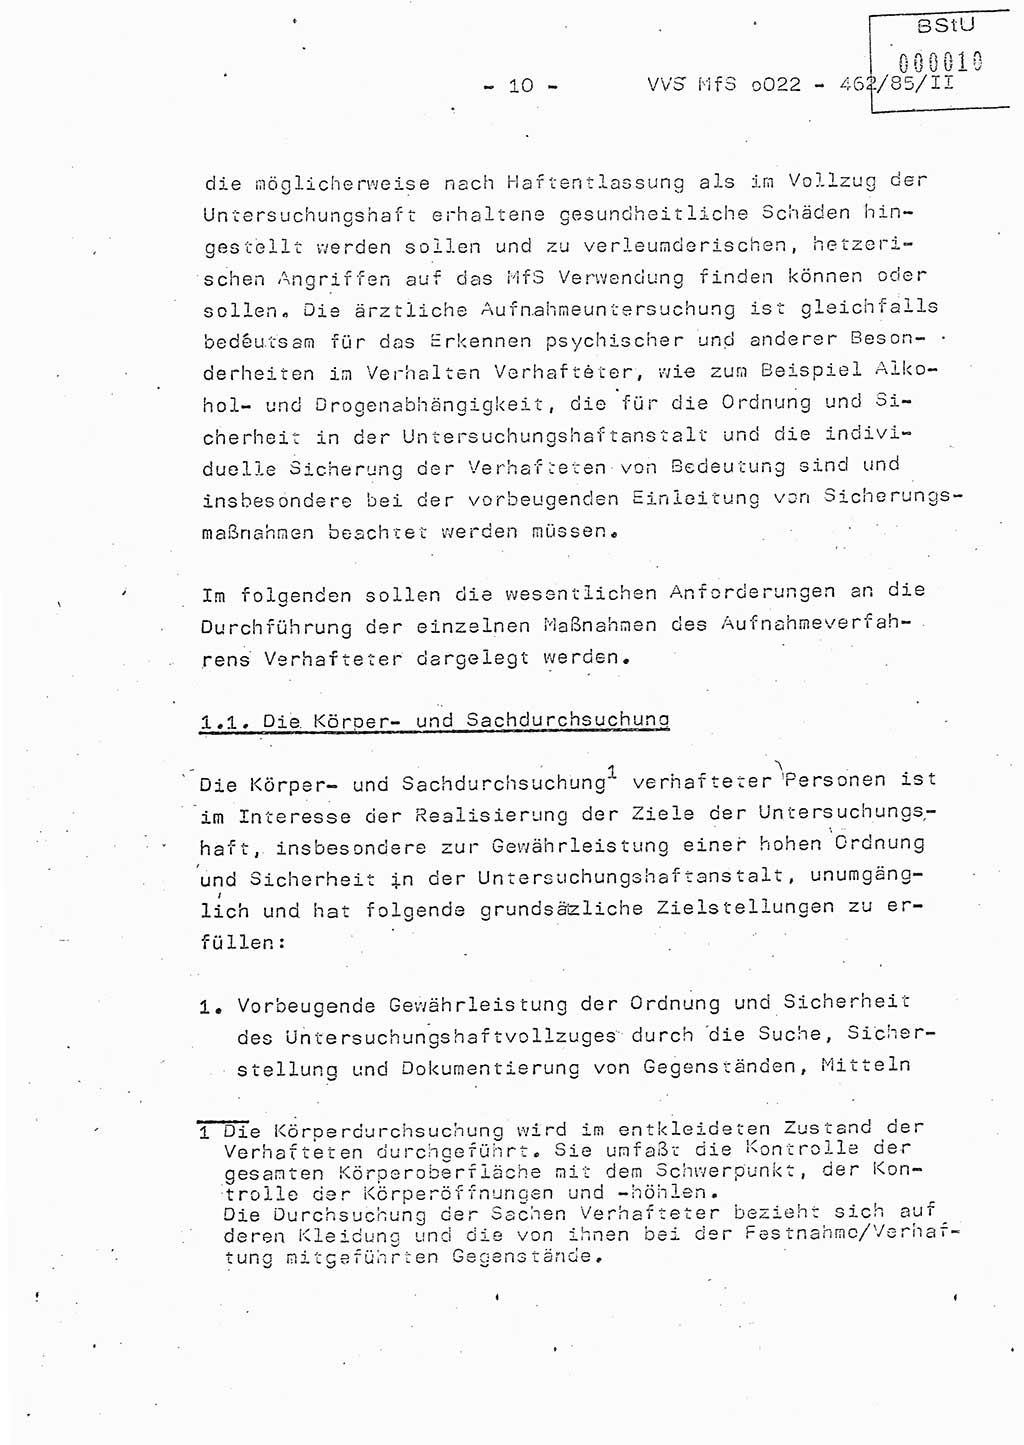 Der Untersuchungshaftvollzug im MfS, Schulungsmaterial Teil â…¡, Ministerium fÃ¼r Staatssicherheit [Deutsche Demokratische Republik (DDR)], Abteilung (Abt.) â…©â…£, Vertrauliche VerschluÃŸsache (VVS) o022-462/85/â…¡, Berlin 1985, Seite 10 (Sch.-Mat. â…¡ MfS DDR Abt. â…©â…£ VVS o022-462/85/â…¡ 1985, S. 10)